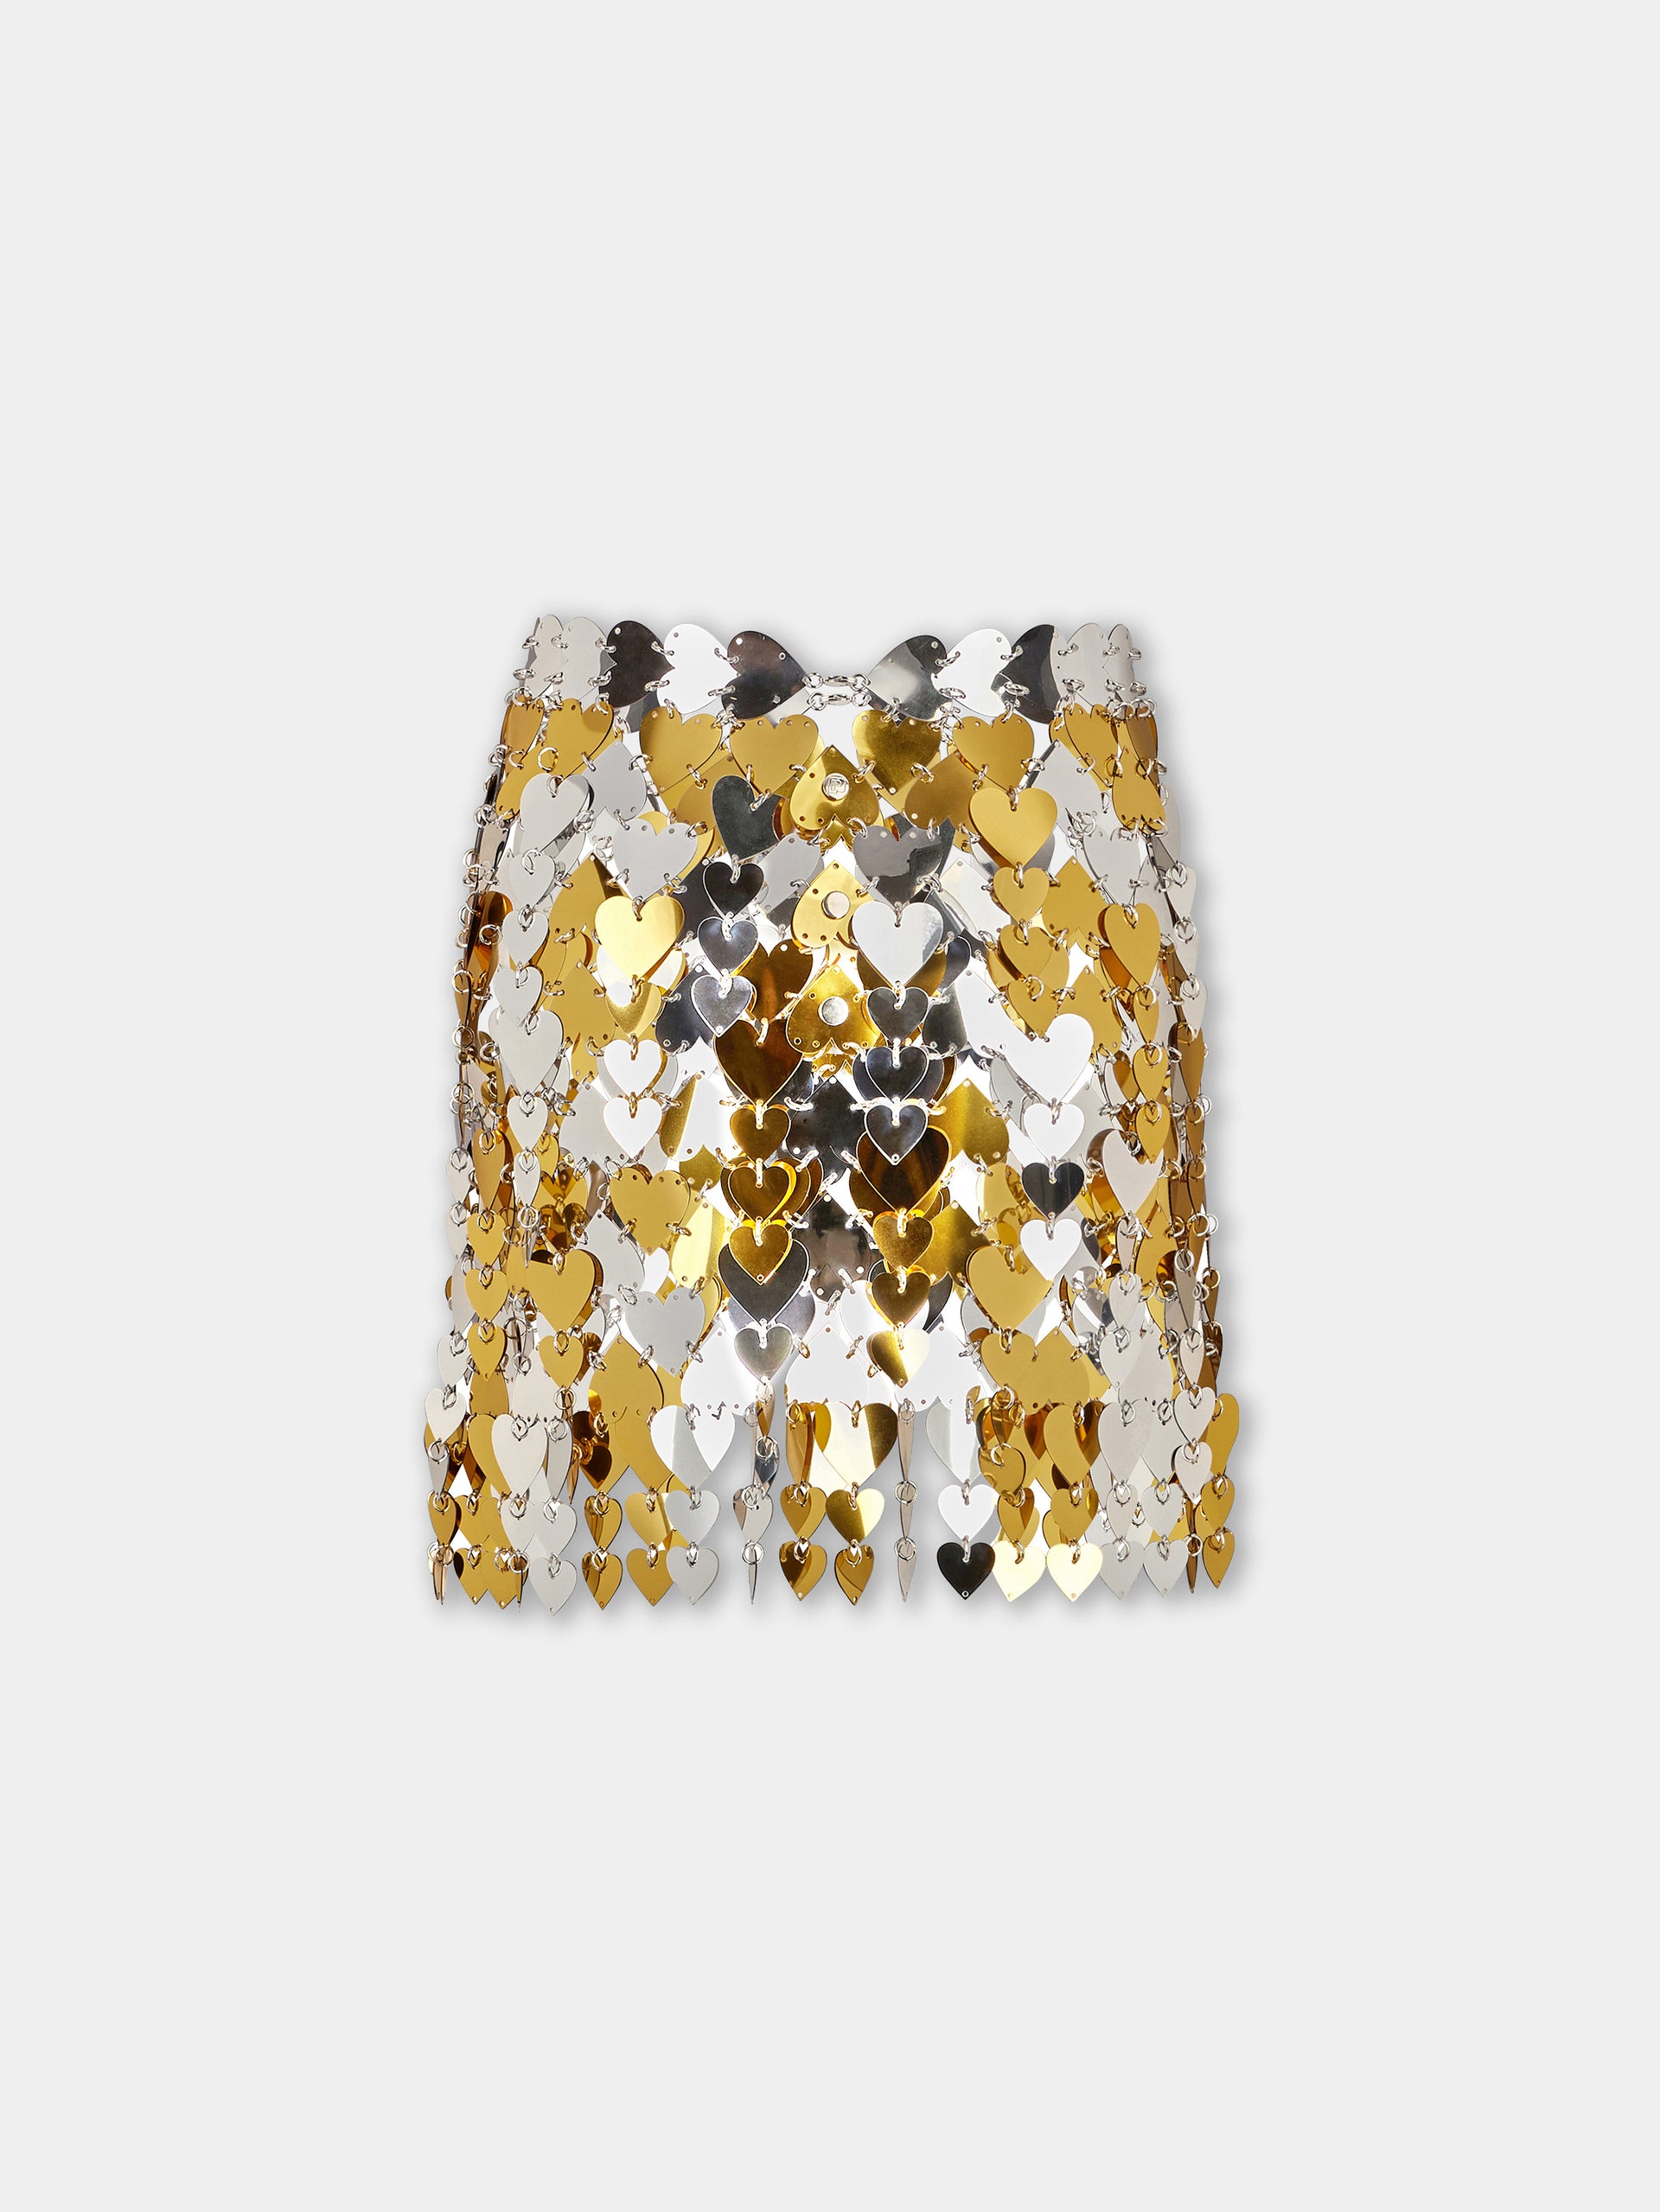 Silver/gold Sparkle skirt